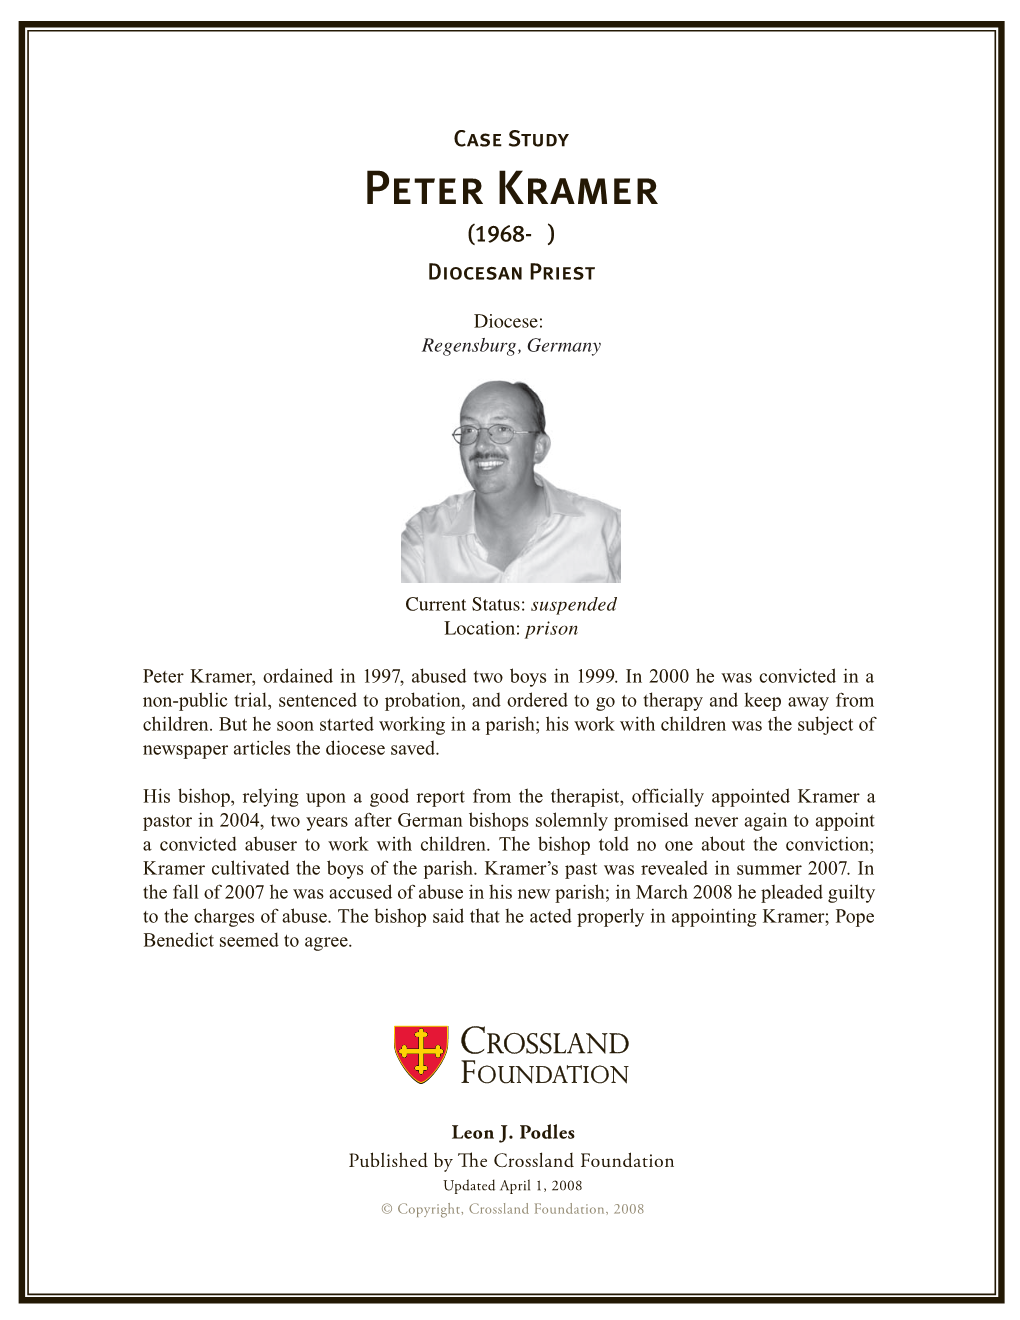 Peter Kramer Case Study